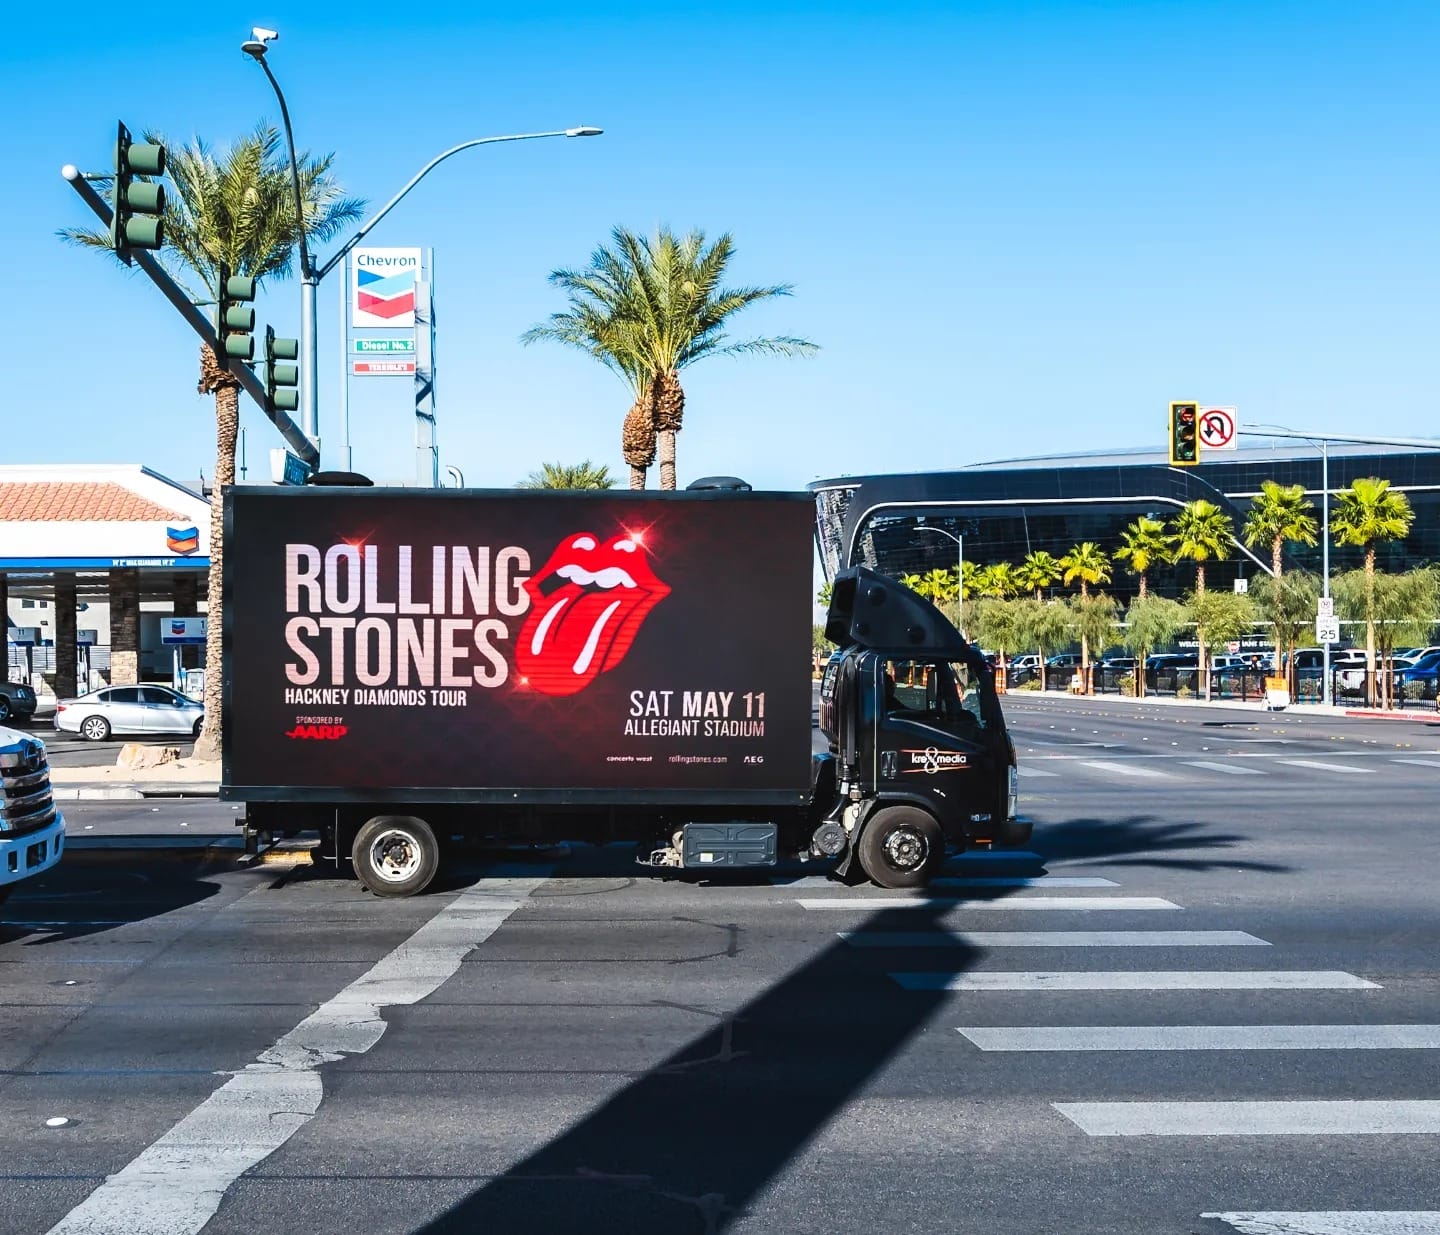 Rolling Stones tour truck advertisement on sunny street